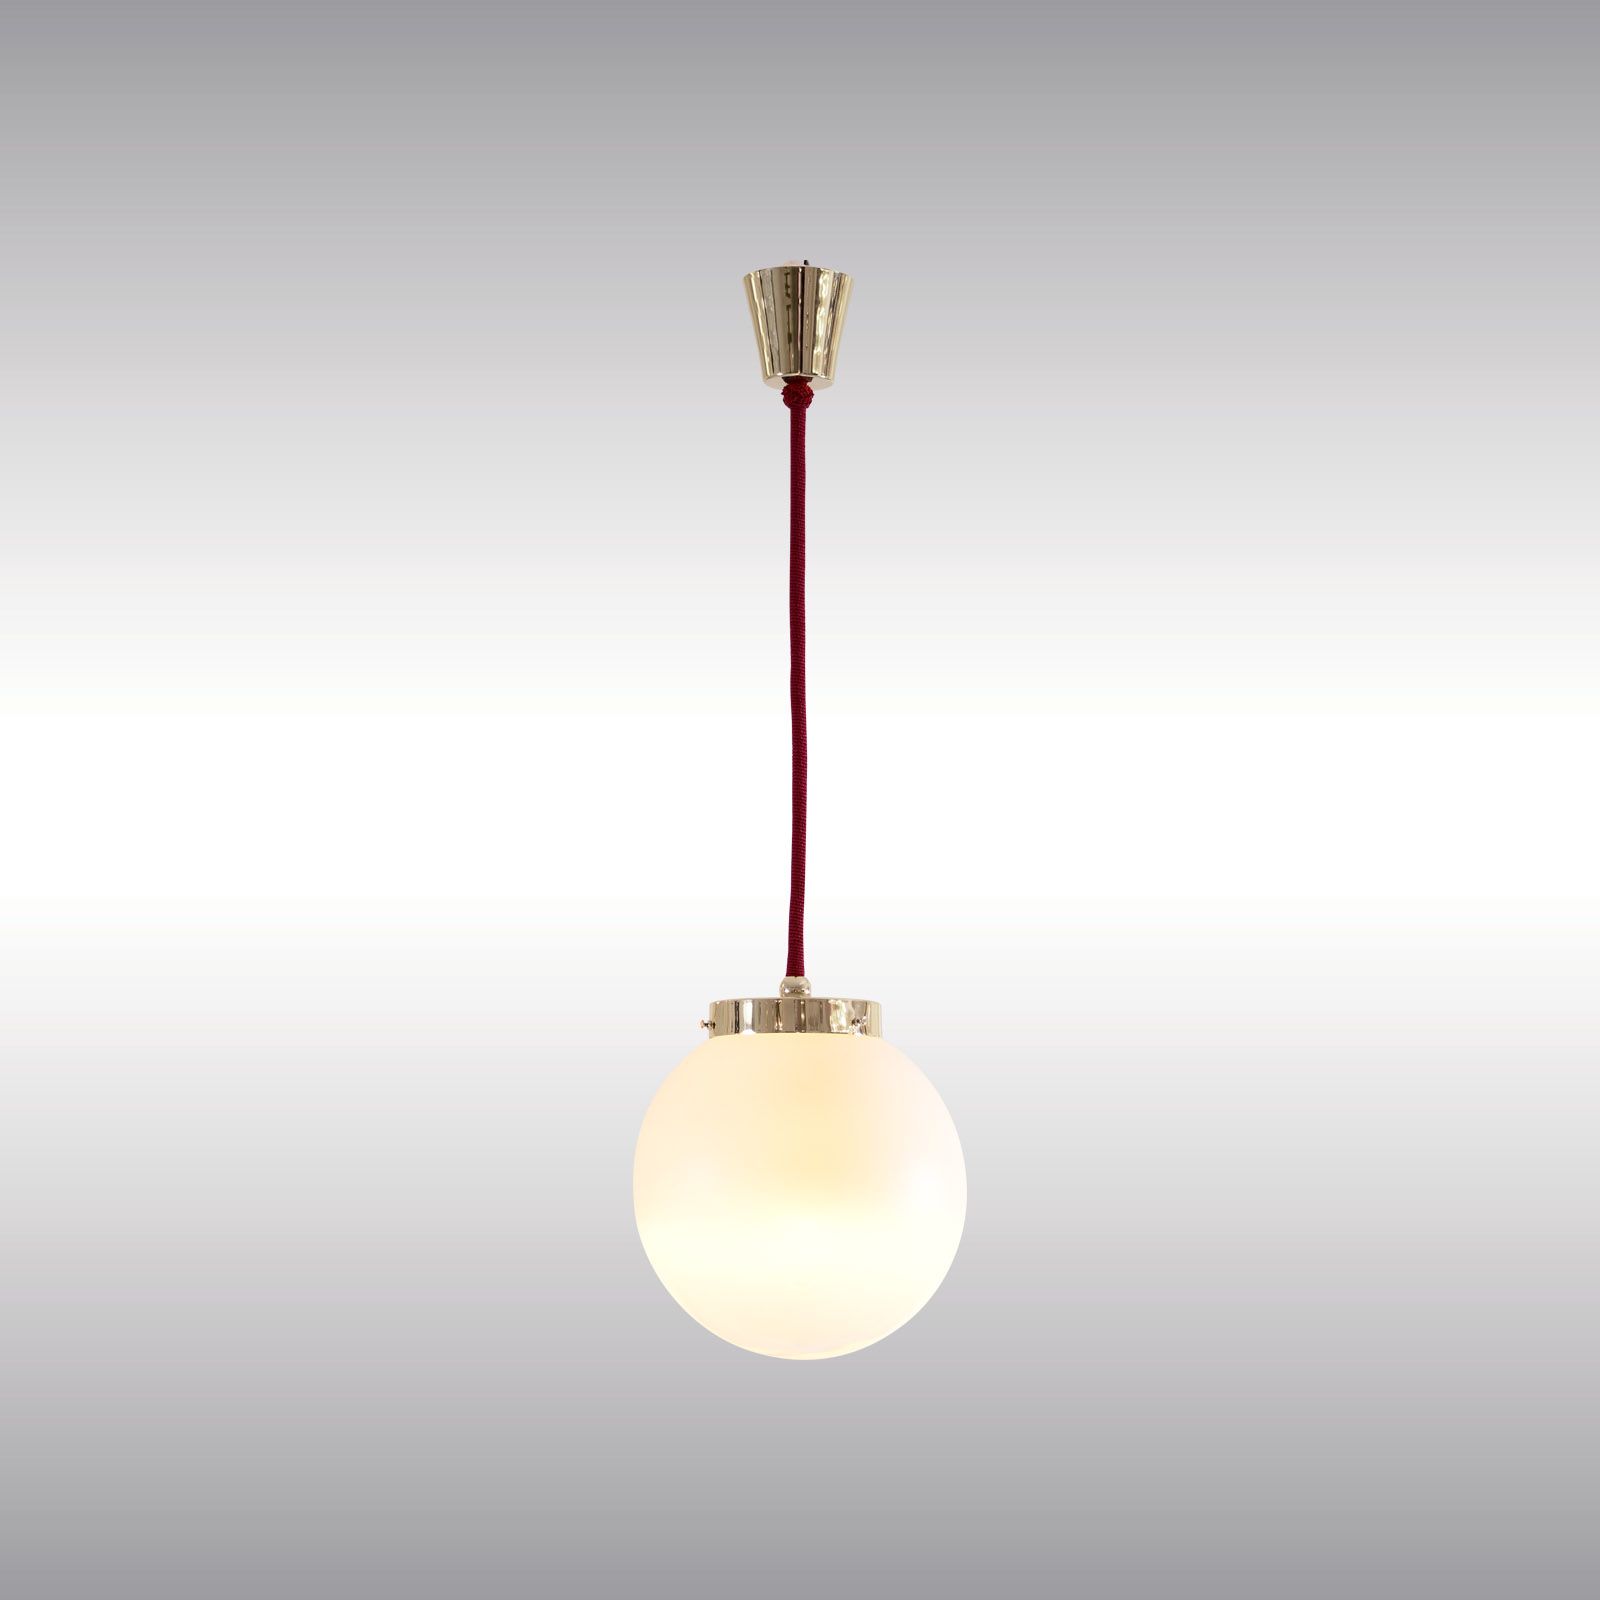 WOKA LAMPS VIENNA - OrderNr.: 21412|Sphere - Design: Bettina Zerza